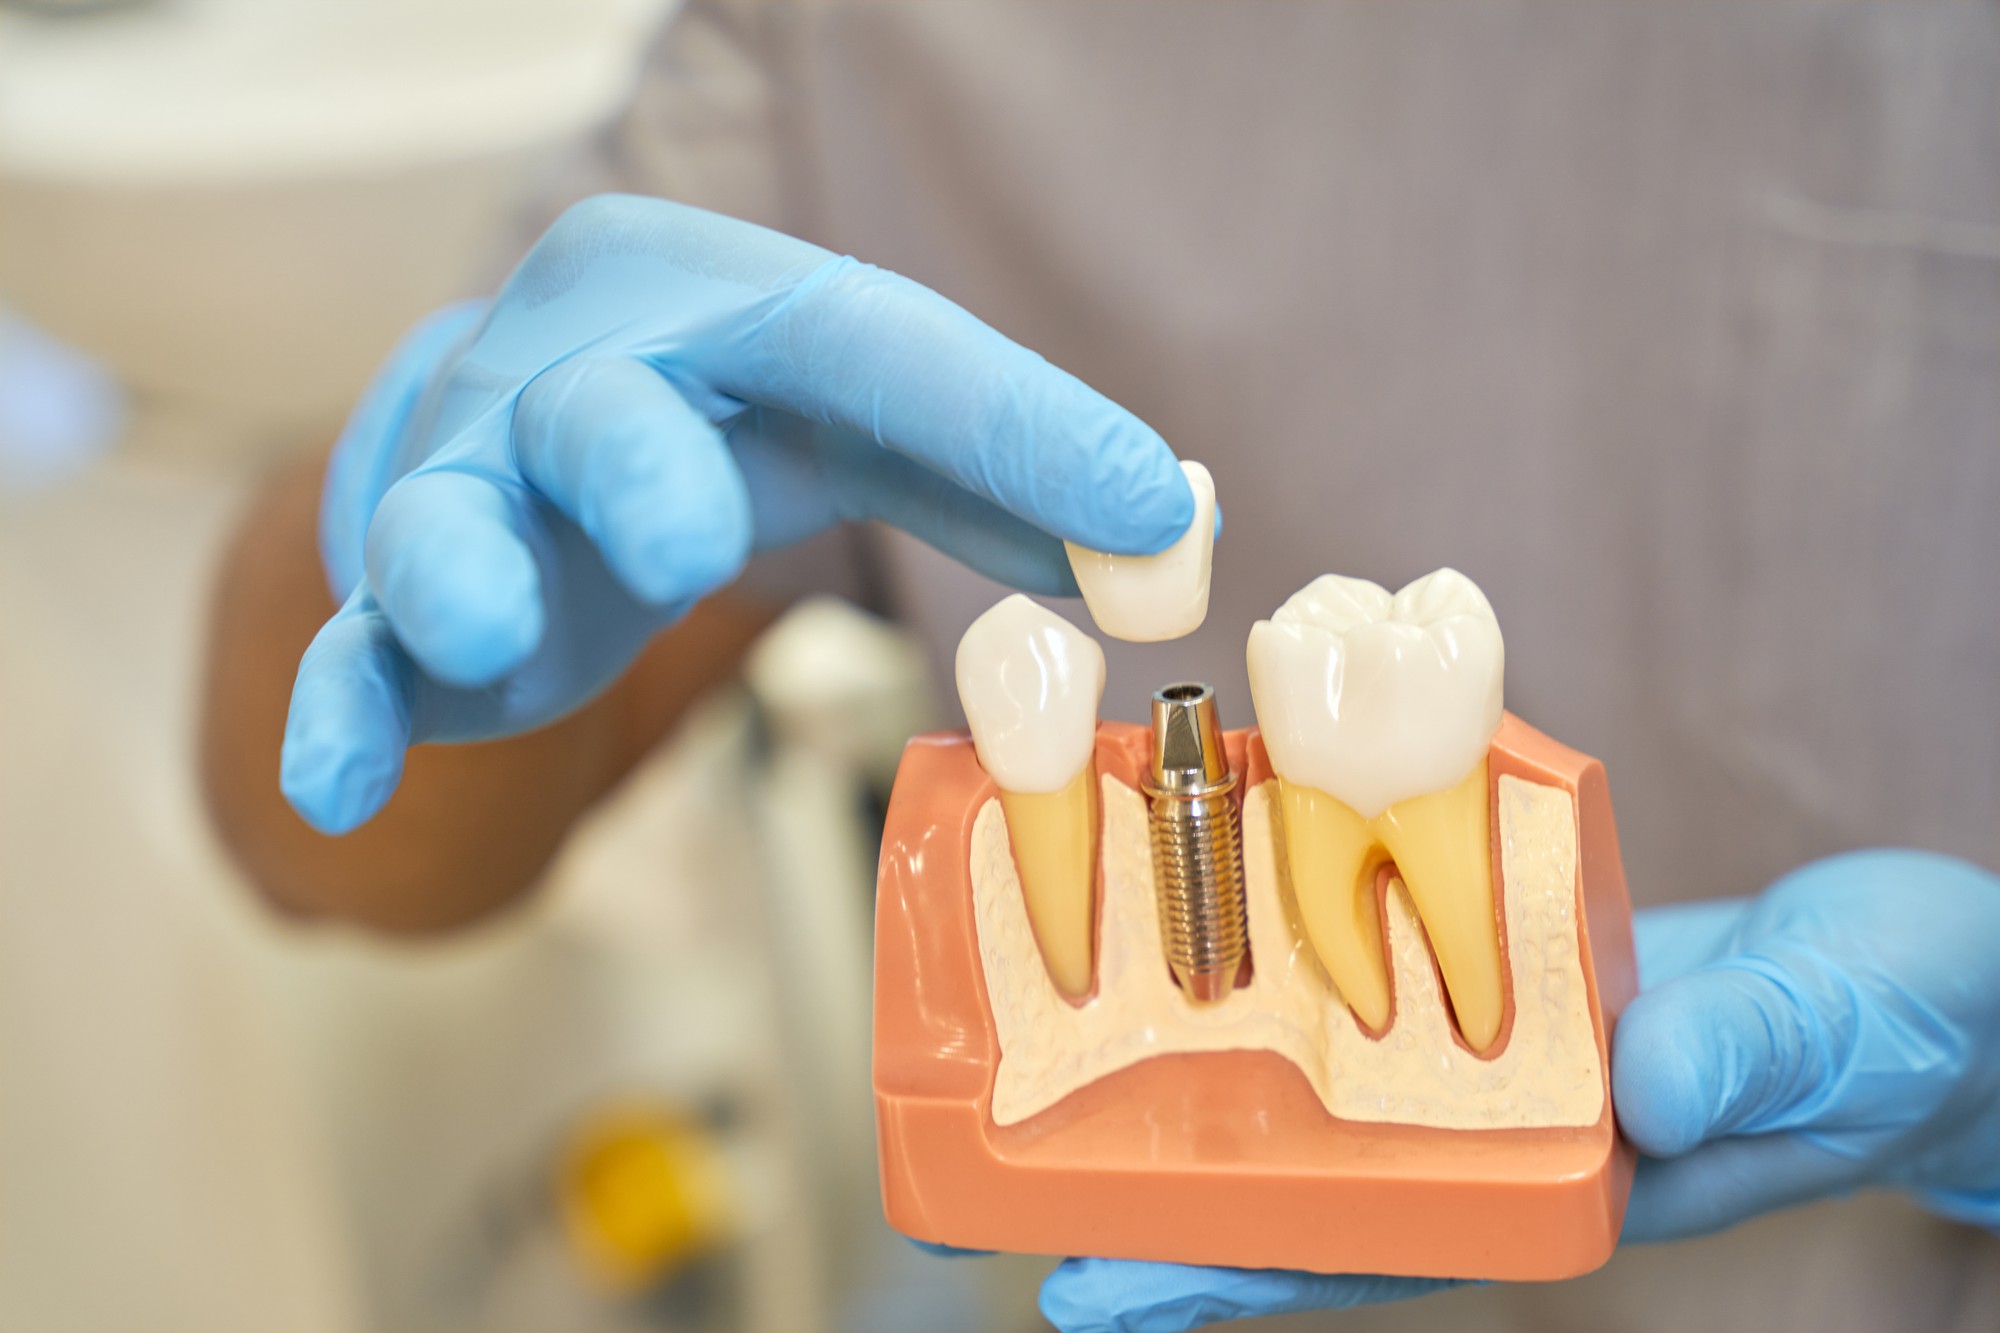 plastic-prop-teeth-implant-being-shown-by-dentist_386185-1612